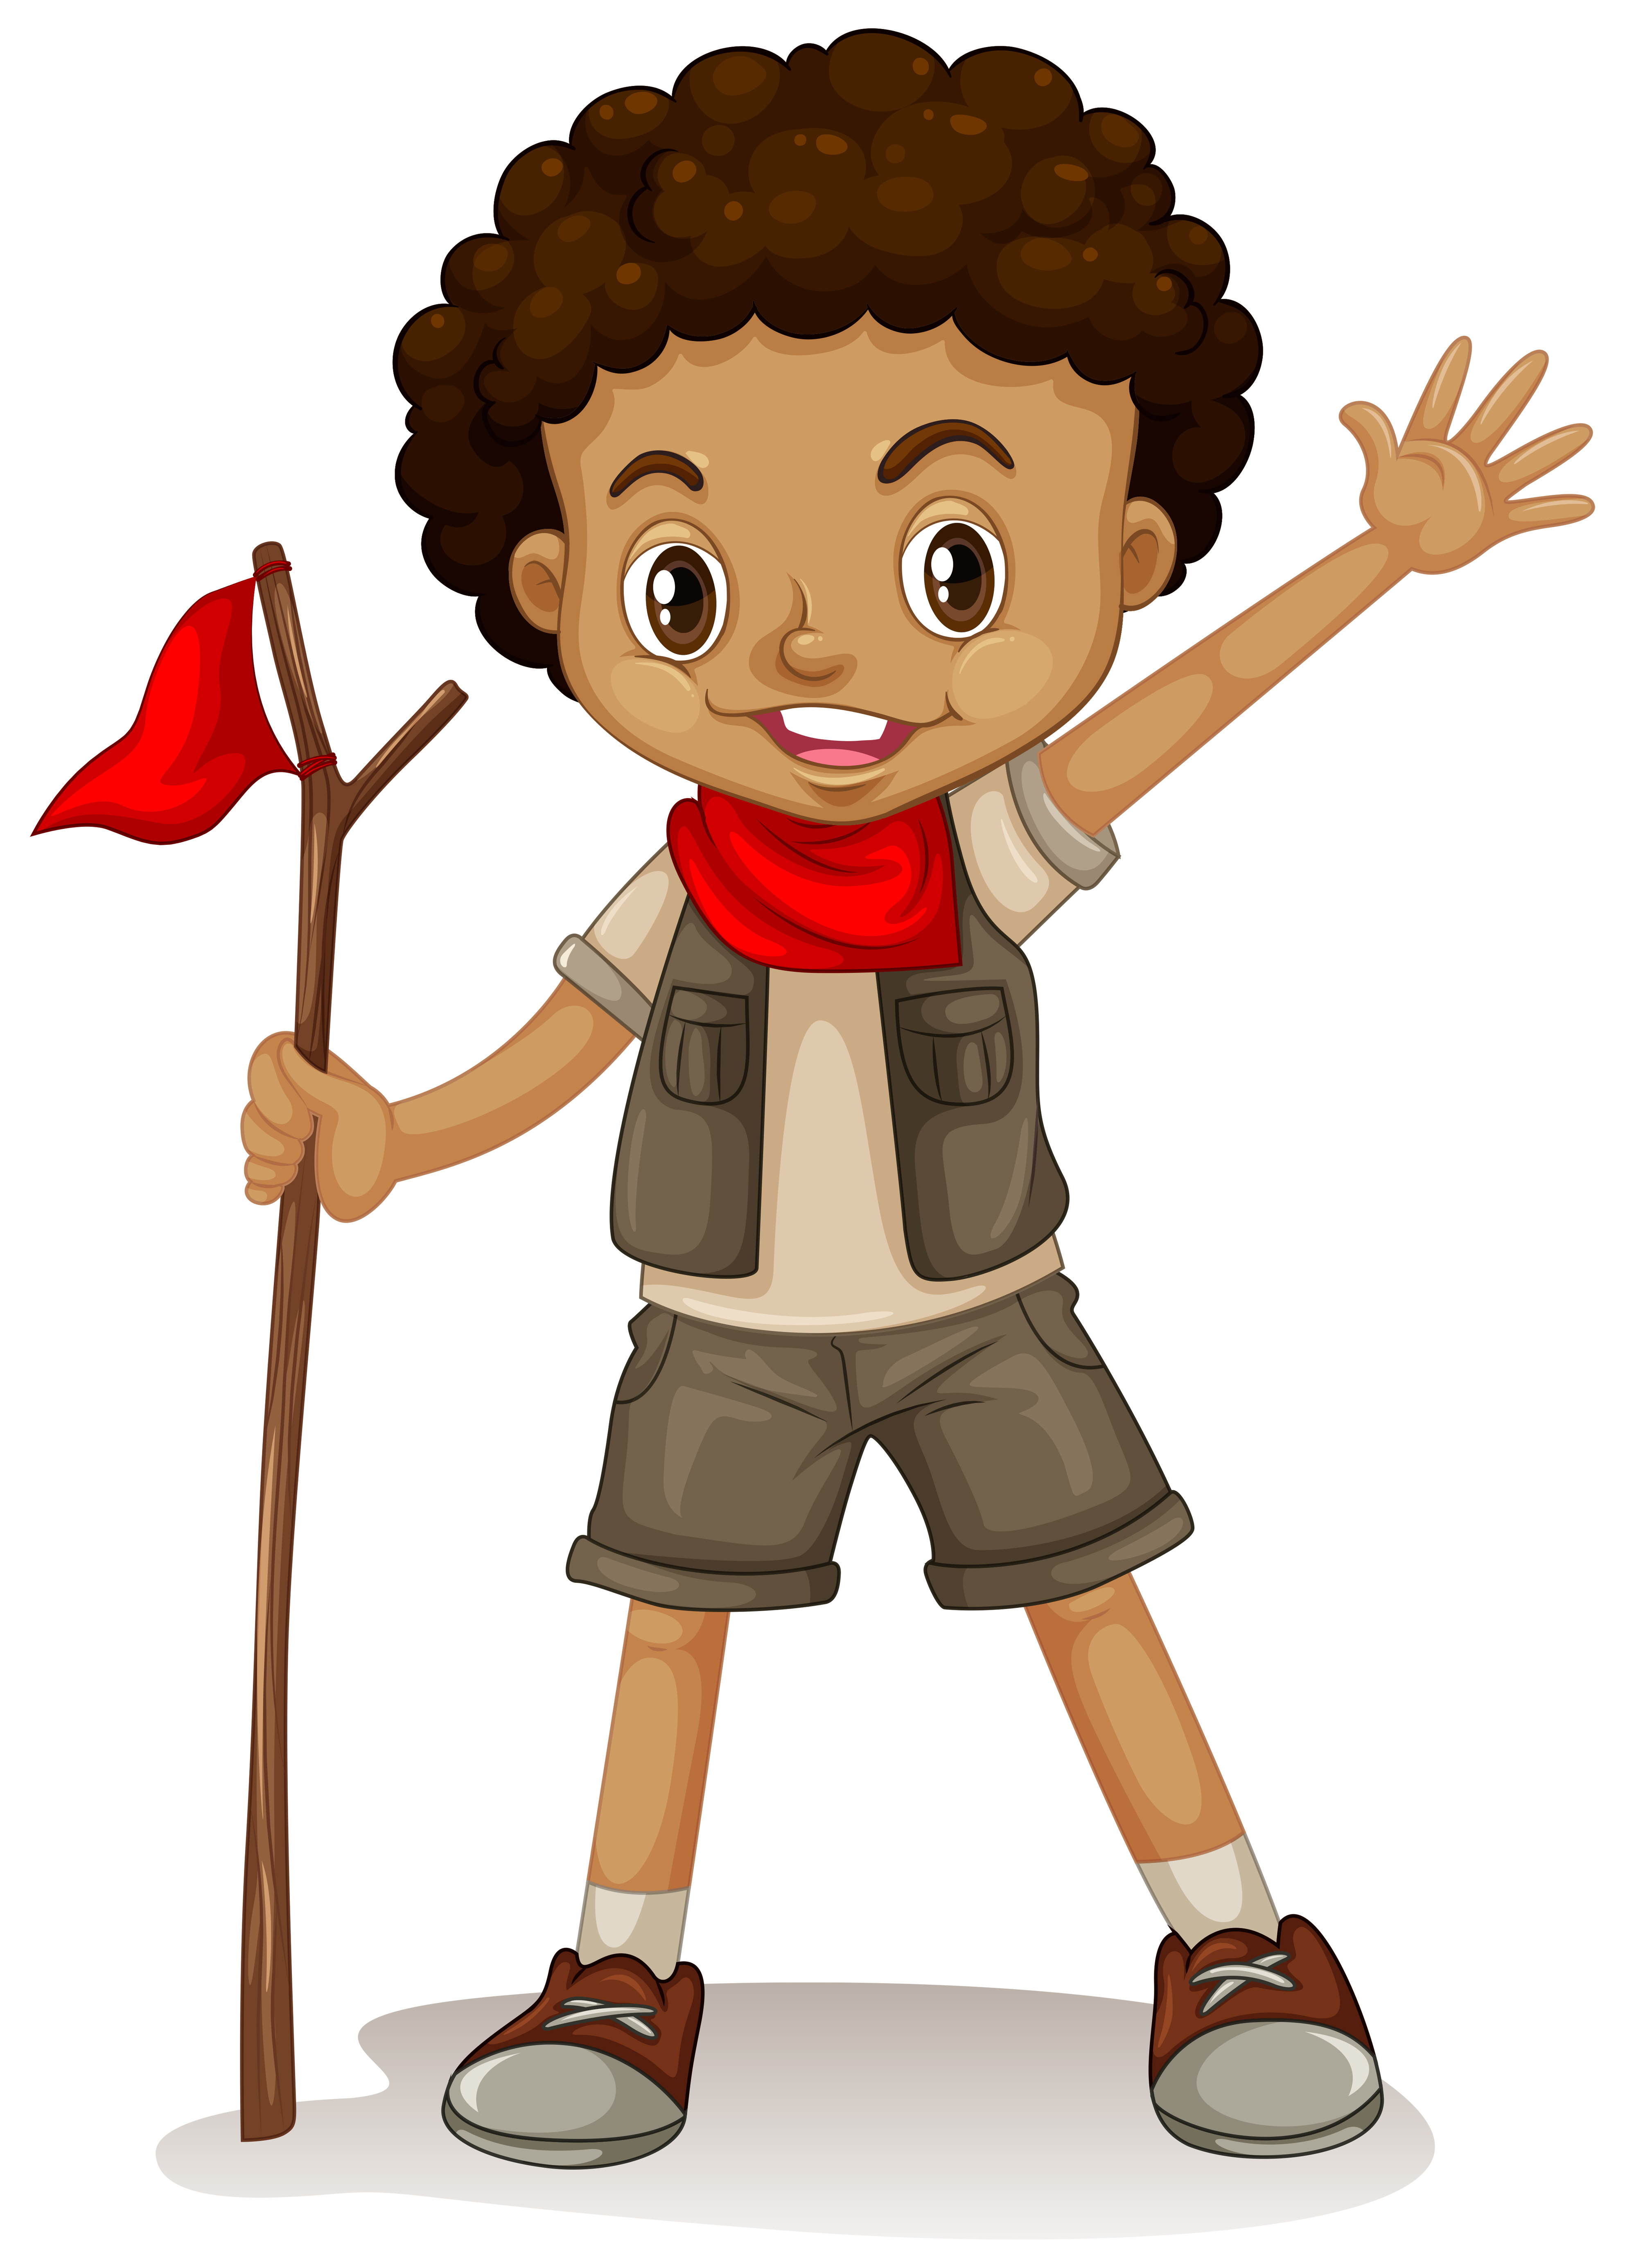 A young Boy Scout - Download Free Vectors, Clipart Graphics & Vector Art